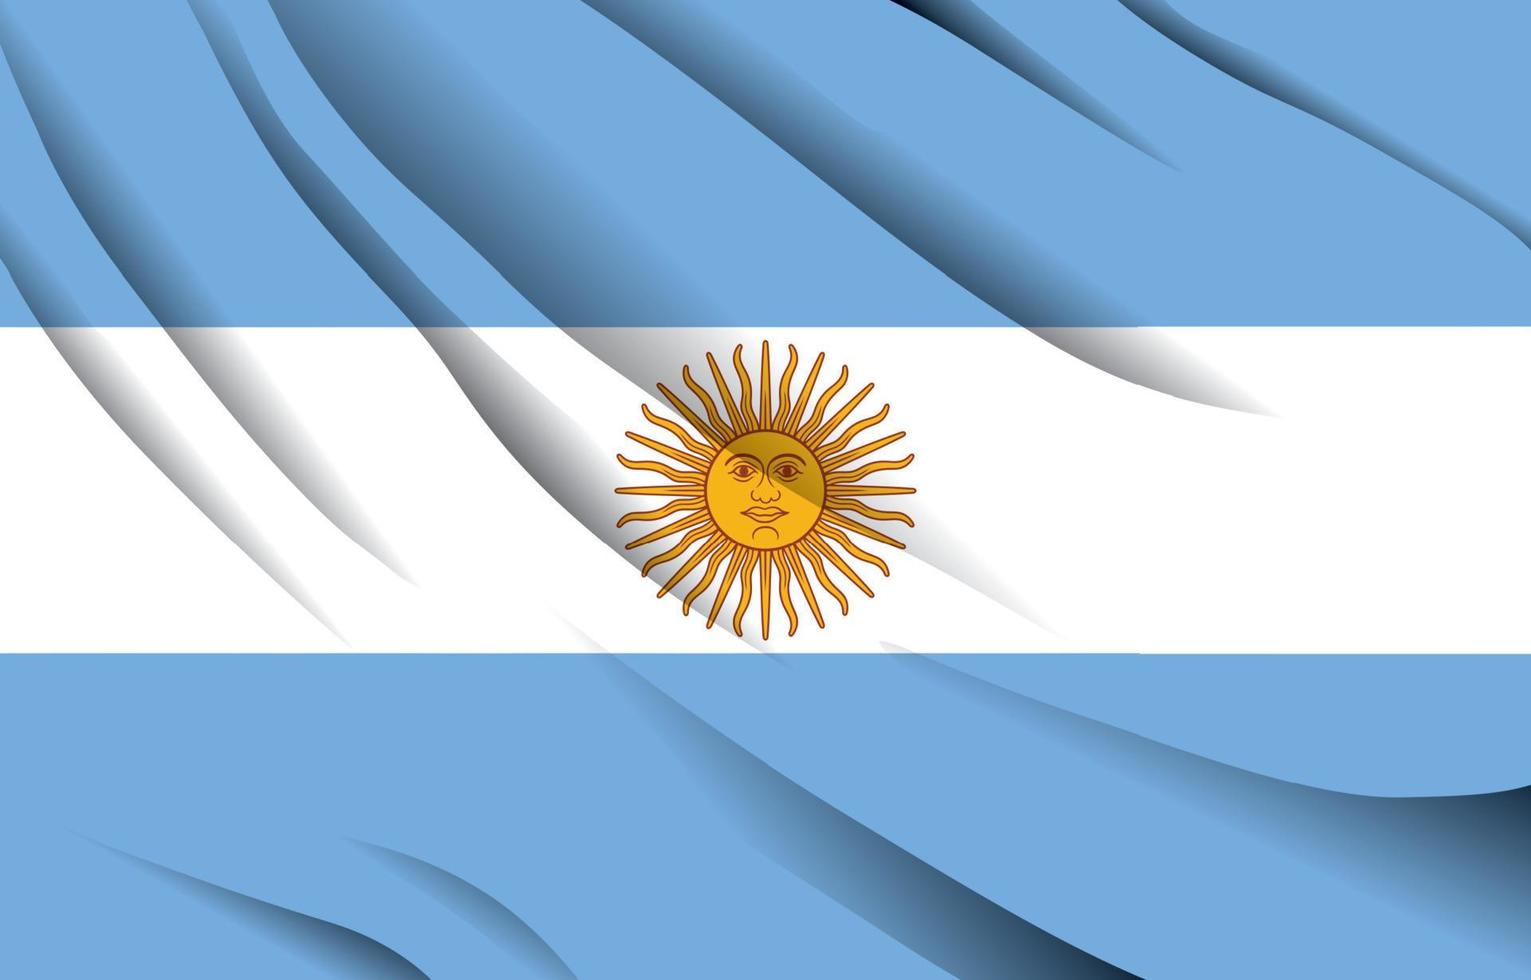 Argentina national flag waving realistic vector illustration